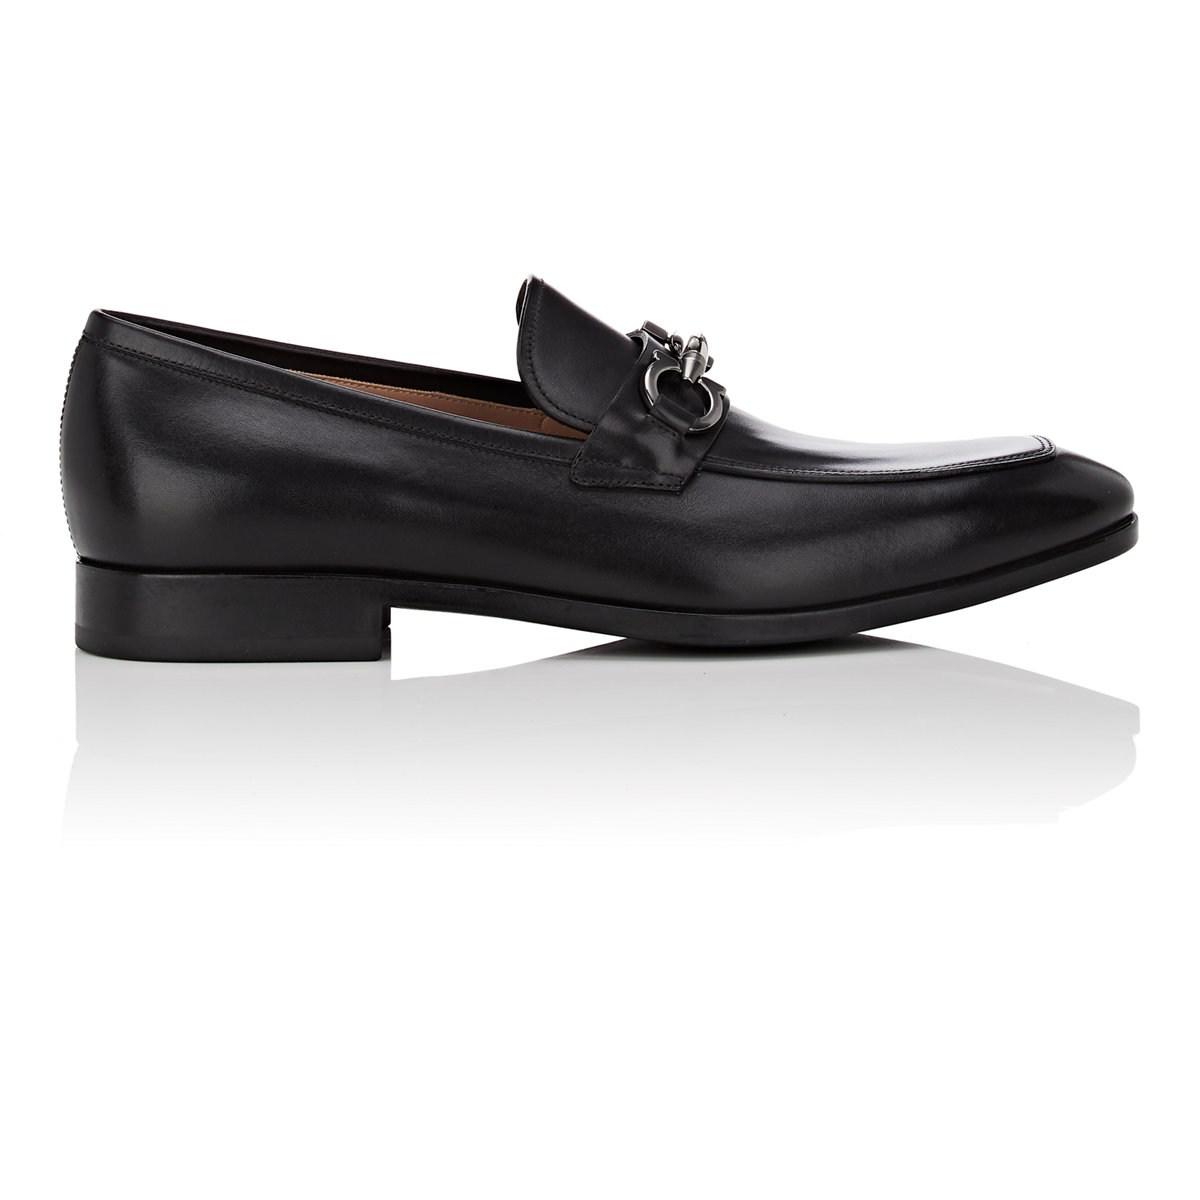 Lyst - Ferragamo Benford Leather Loafers in Black for Men